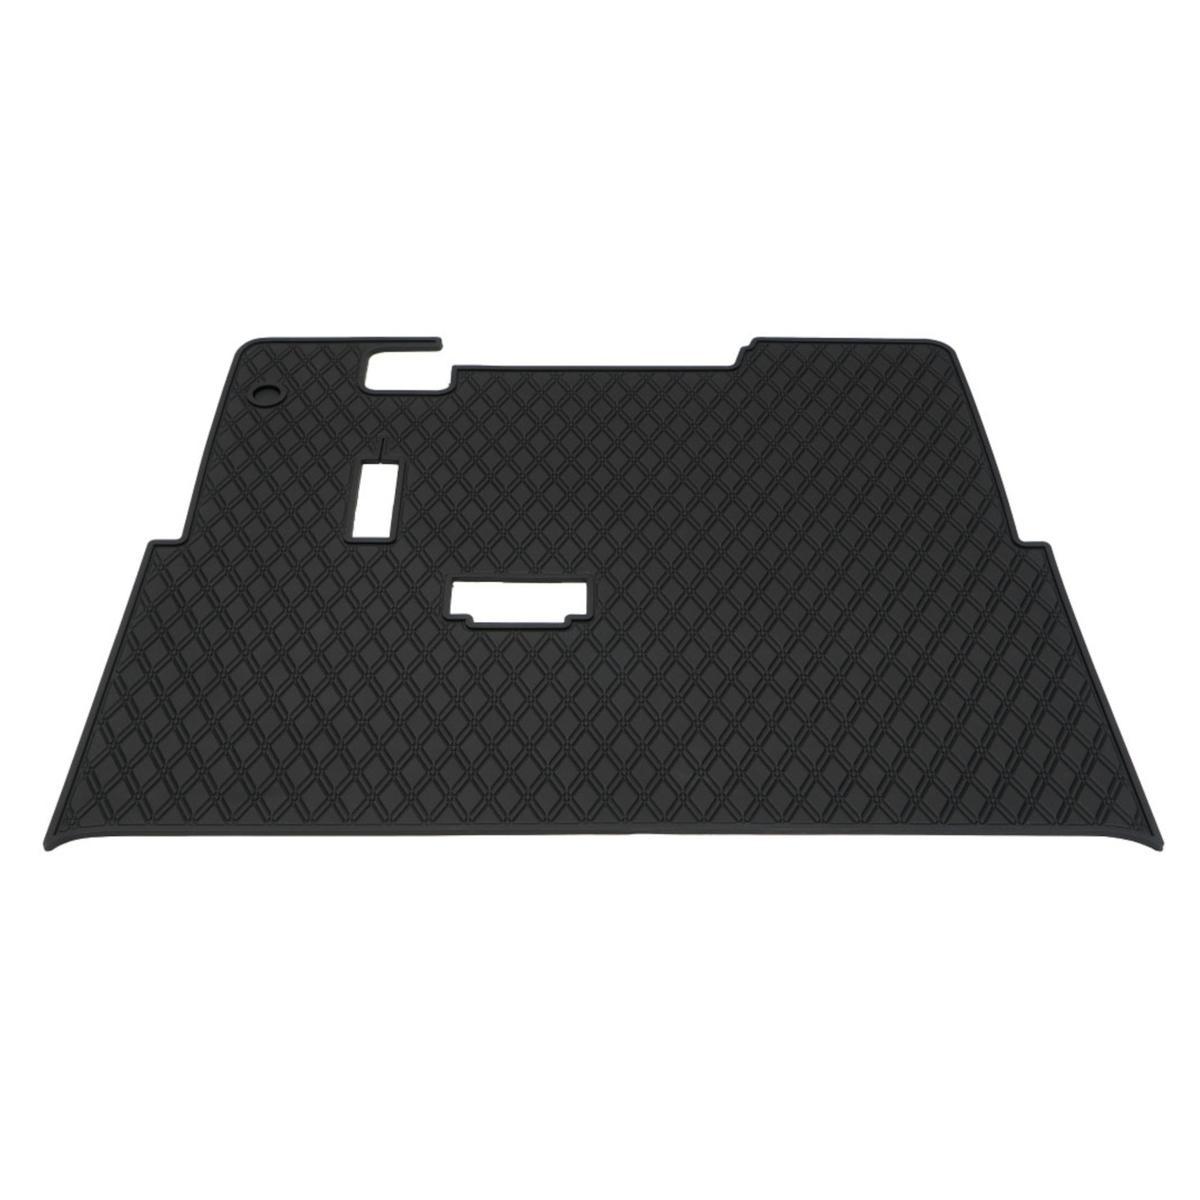 Xtreme Floor Mats for EZGO TXT / Workhorse / Express S4 / Valor / Cushman / Navitas (TXT Frame) - All Black